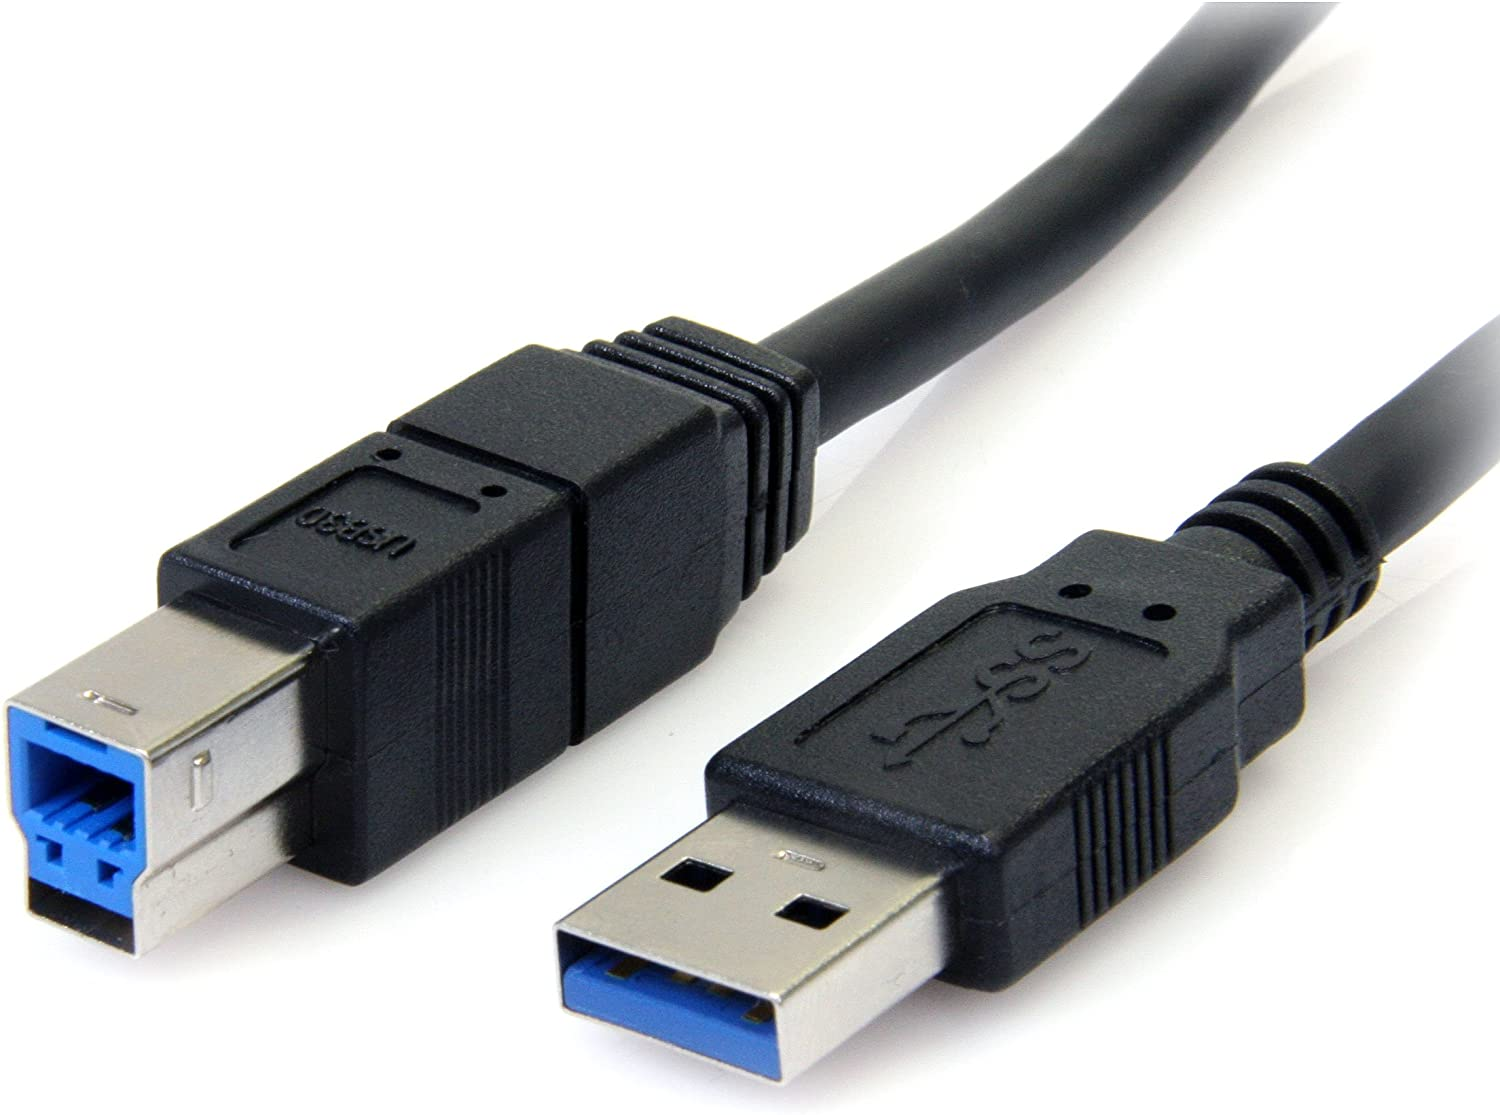 C2G 6.6ft USB A to USB B Cable - USB A to B Cable - USB 2.0 - Black - M/M -  Type A USB - Type B USB - 6ft - Black